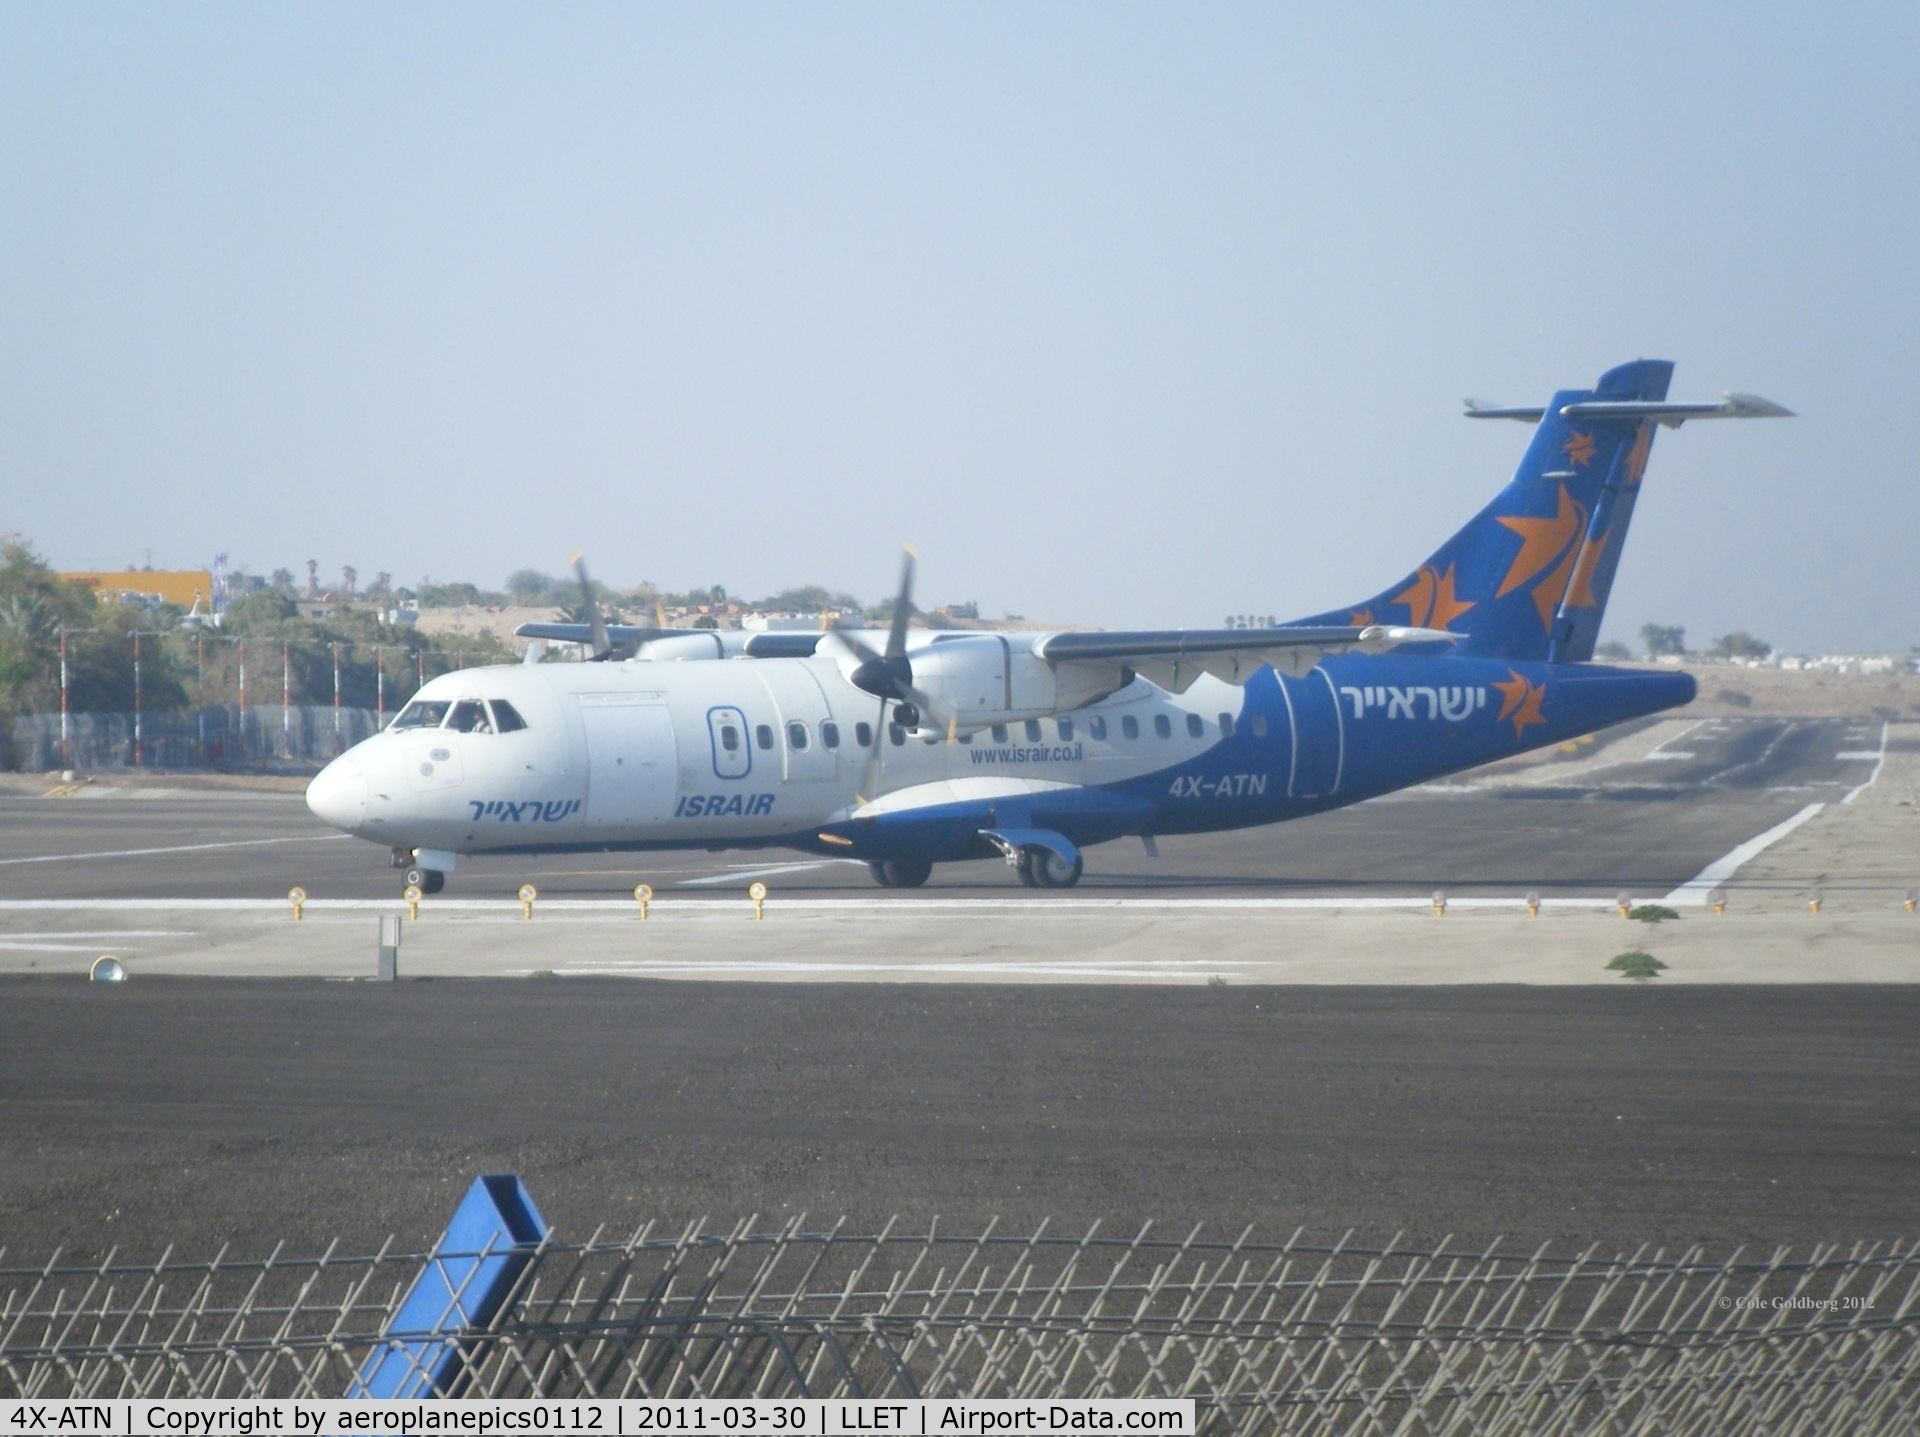 4X-ATN, 1987 ATR 42-300 C/N 053, 4X-ATN taxiing off the runway after landing at LLET.